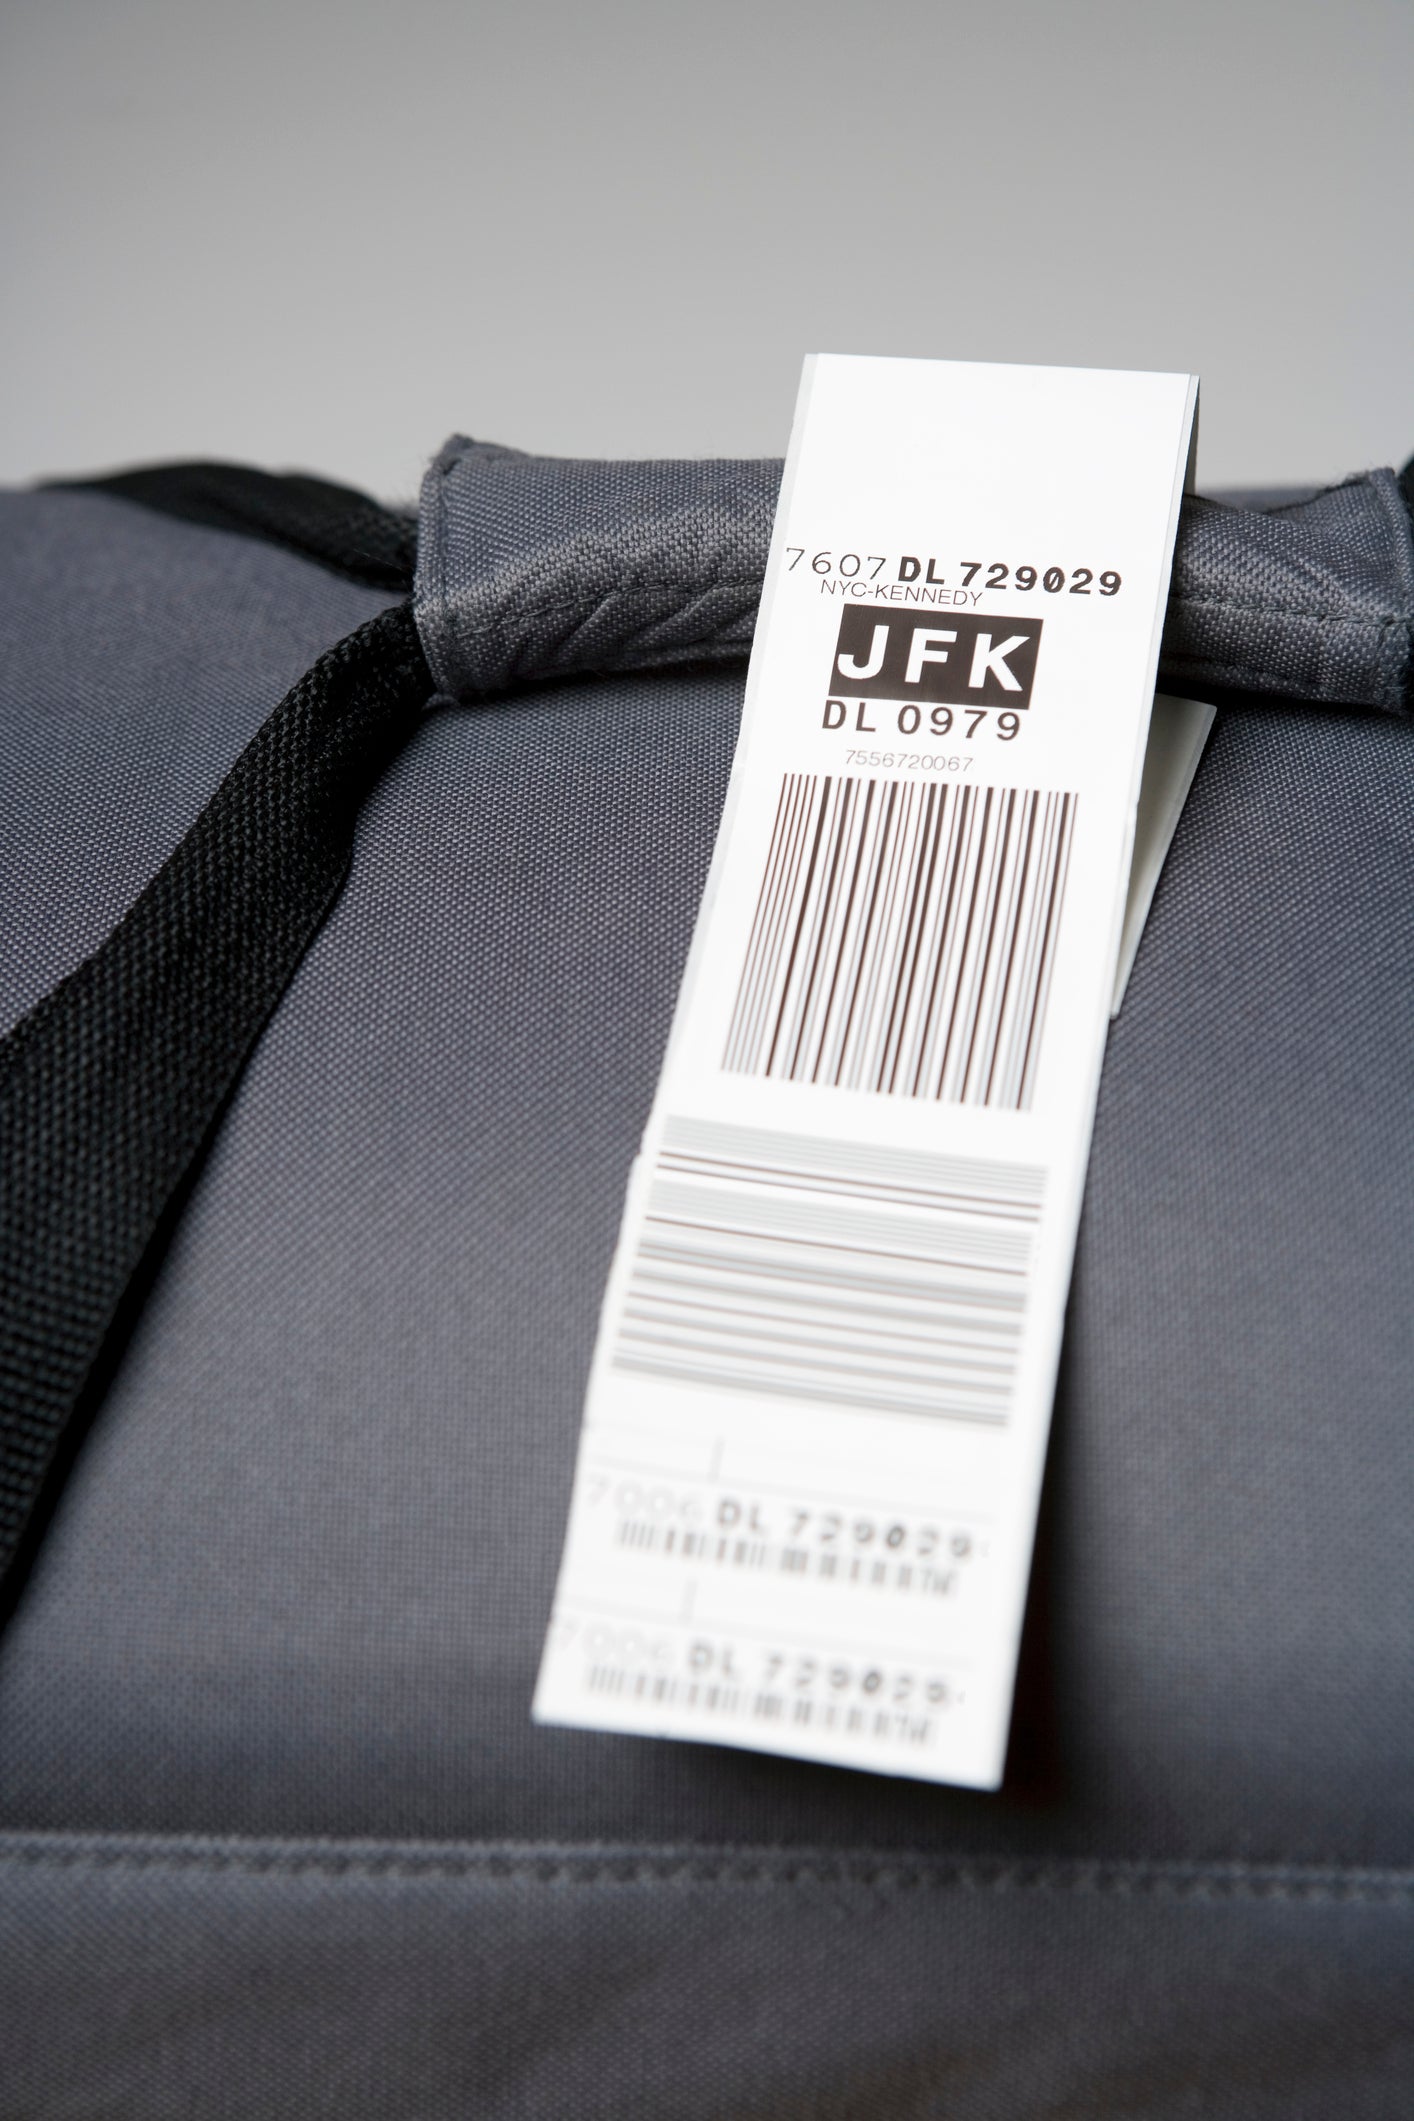 A luggage tag on a bag